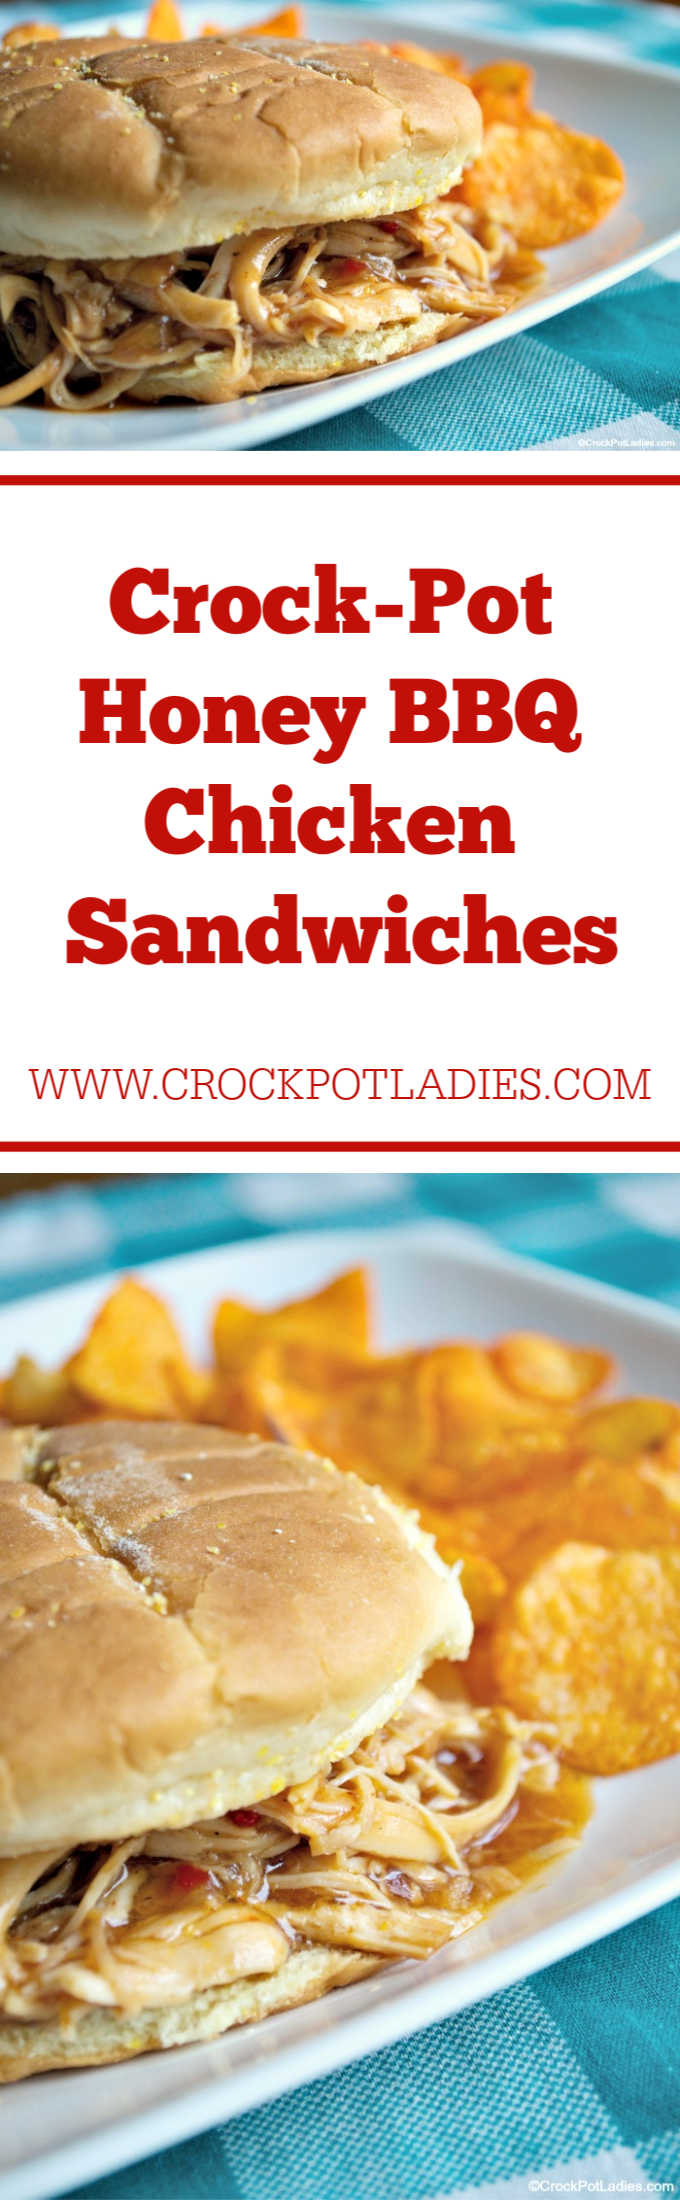 Crock-Pot Honey BBQ Chicken Sandwiches